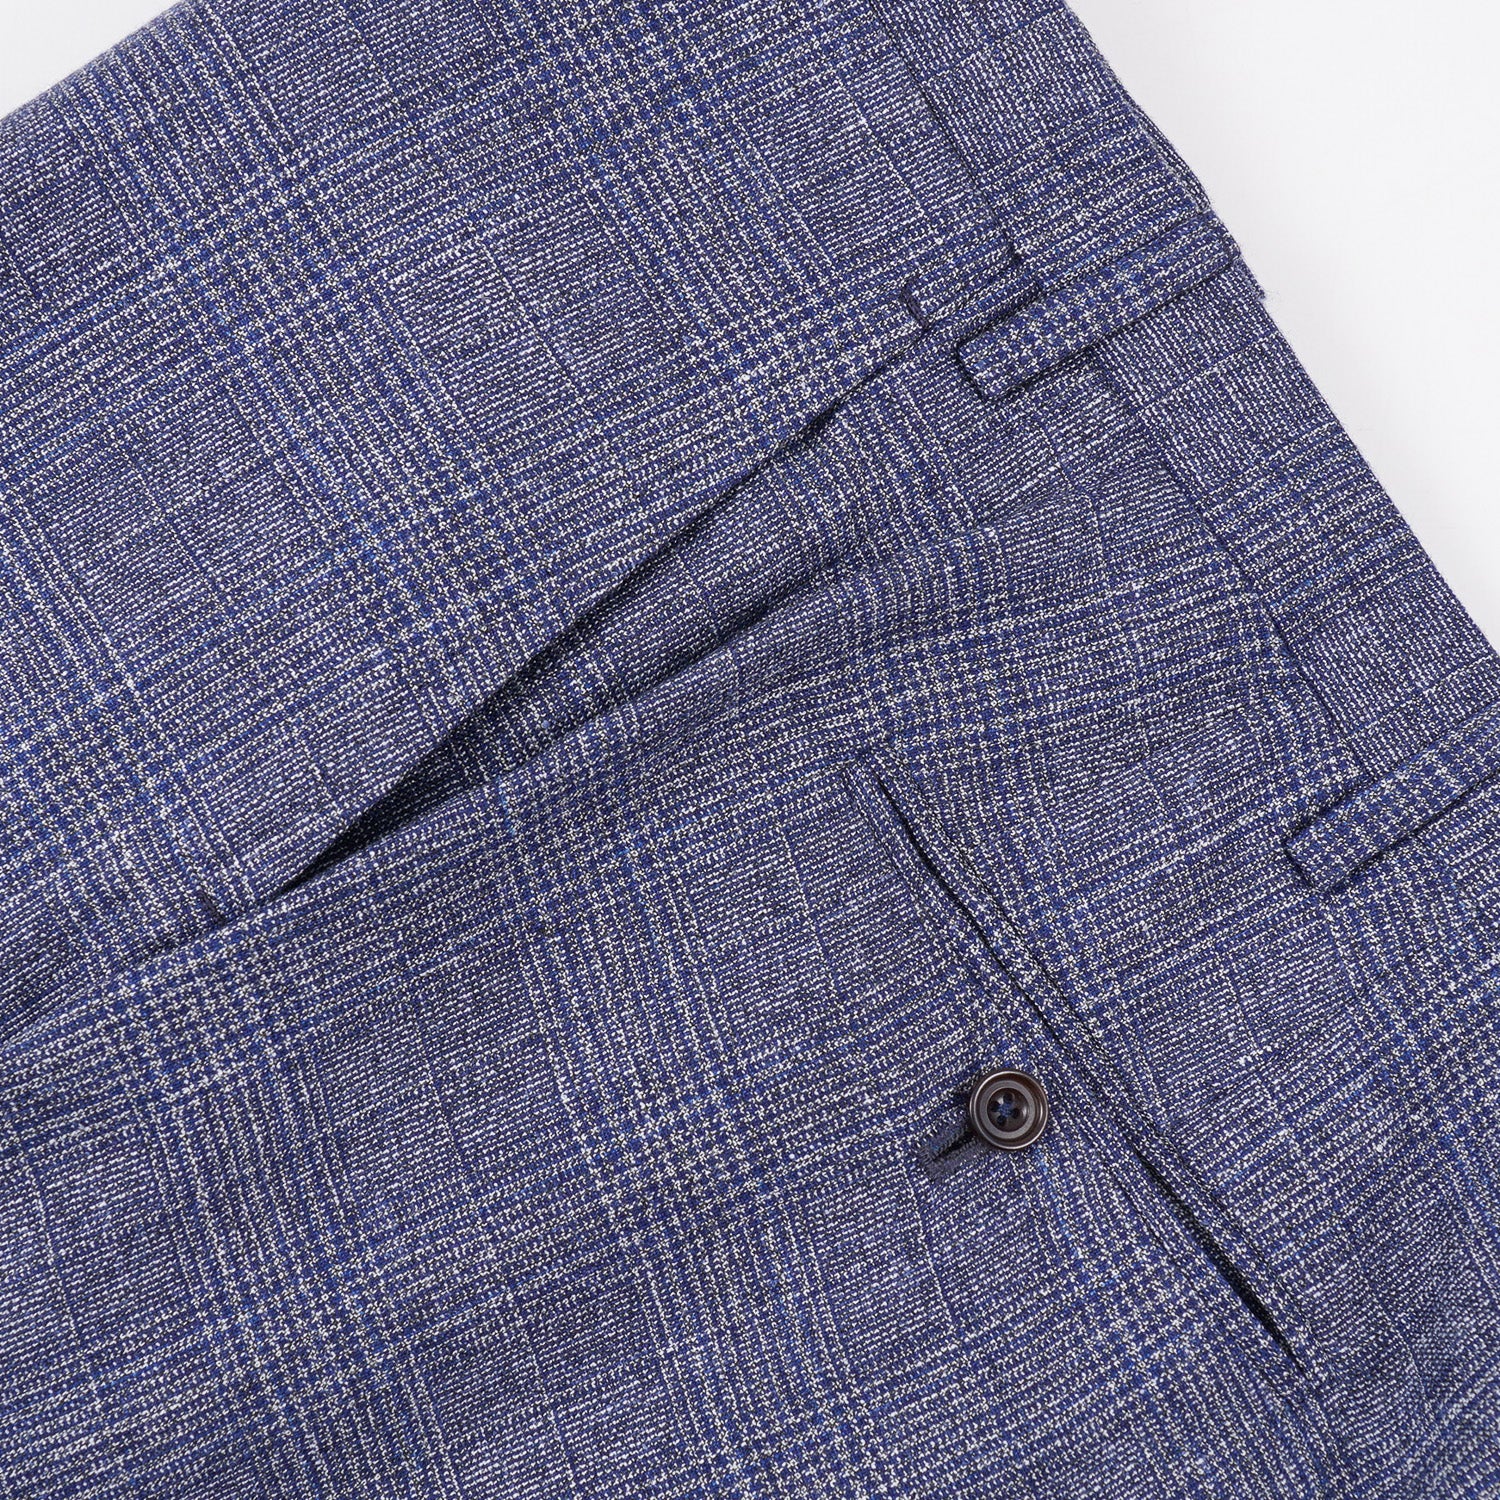 Kiton Cashmere Silk and Linen Suit - Top Shelf Apparel